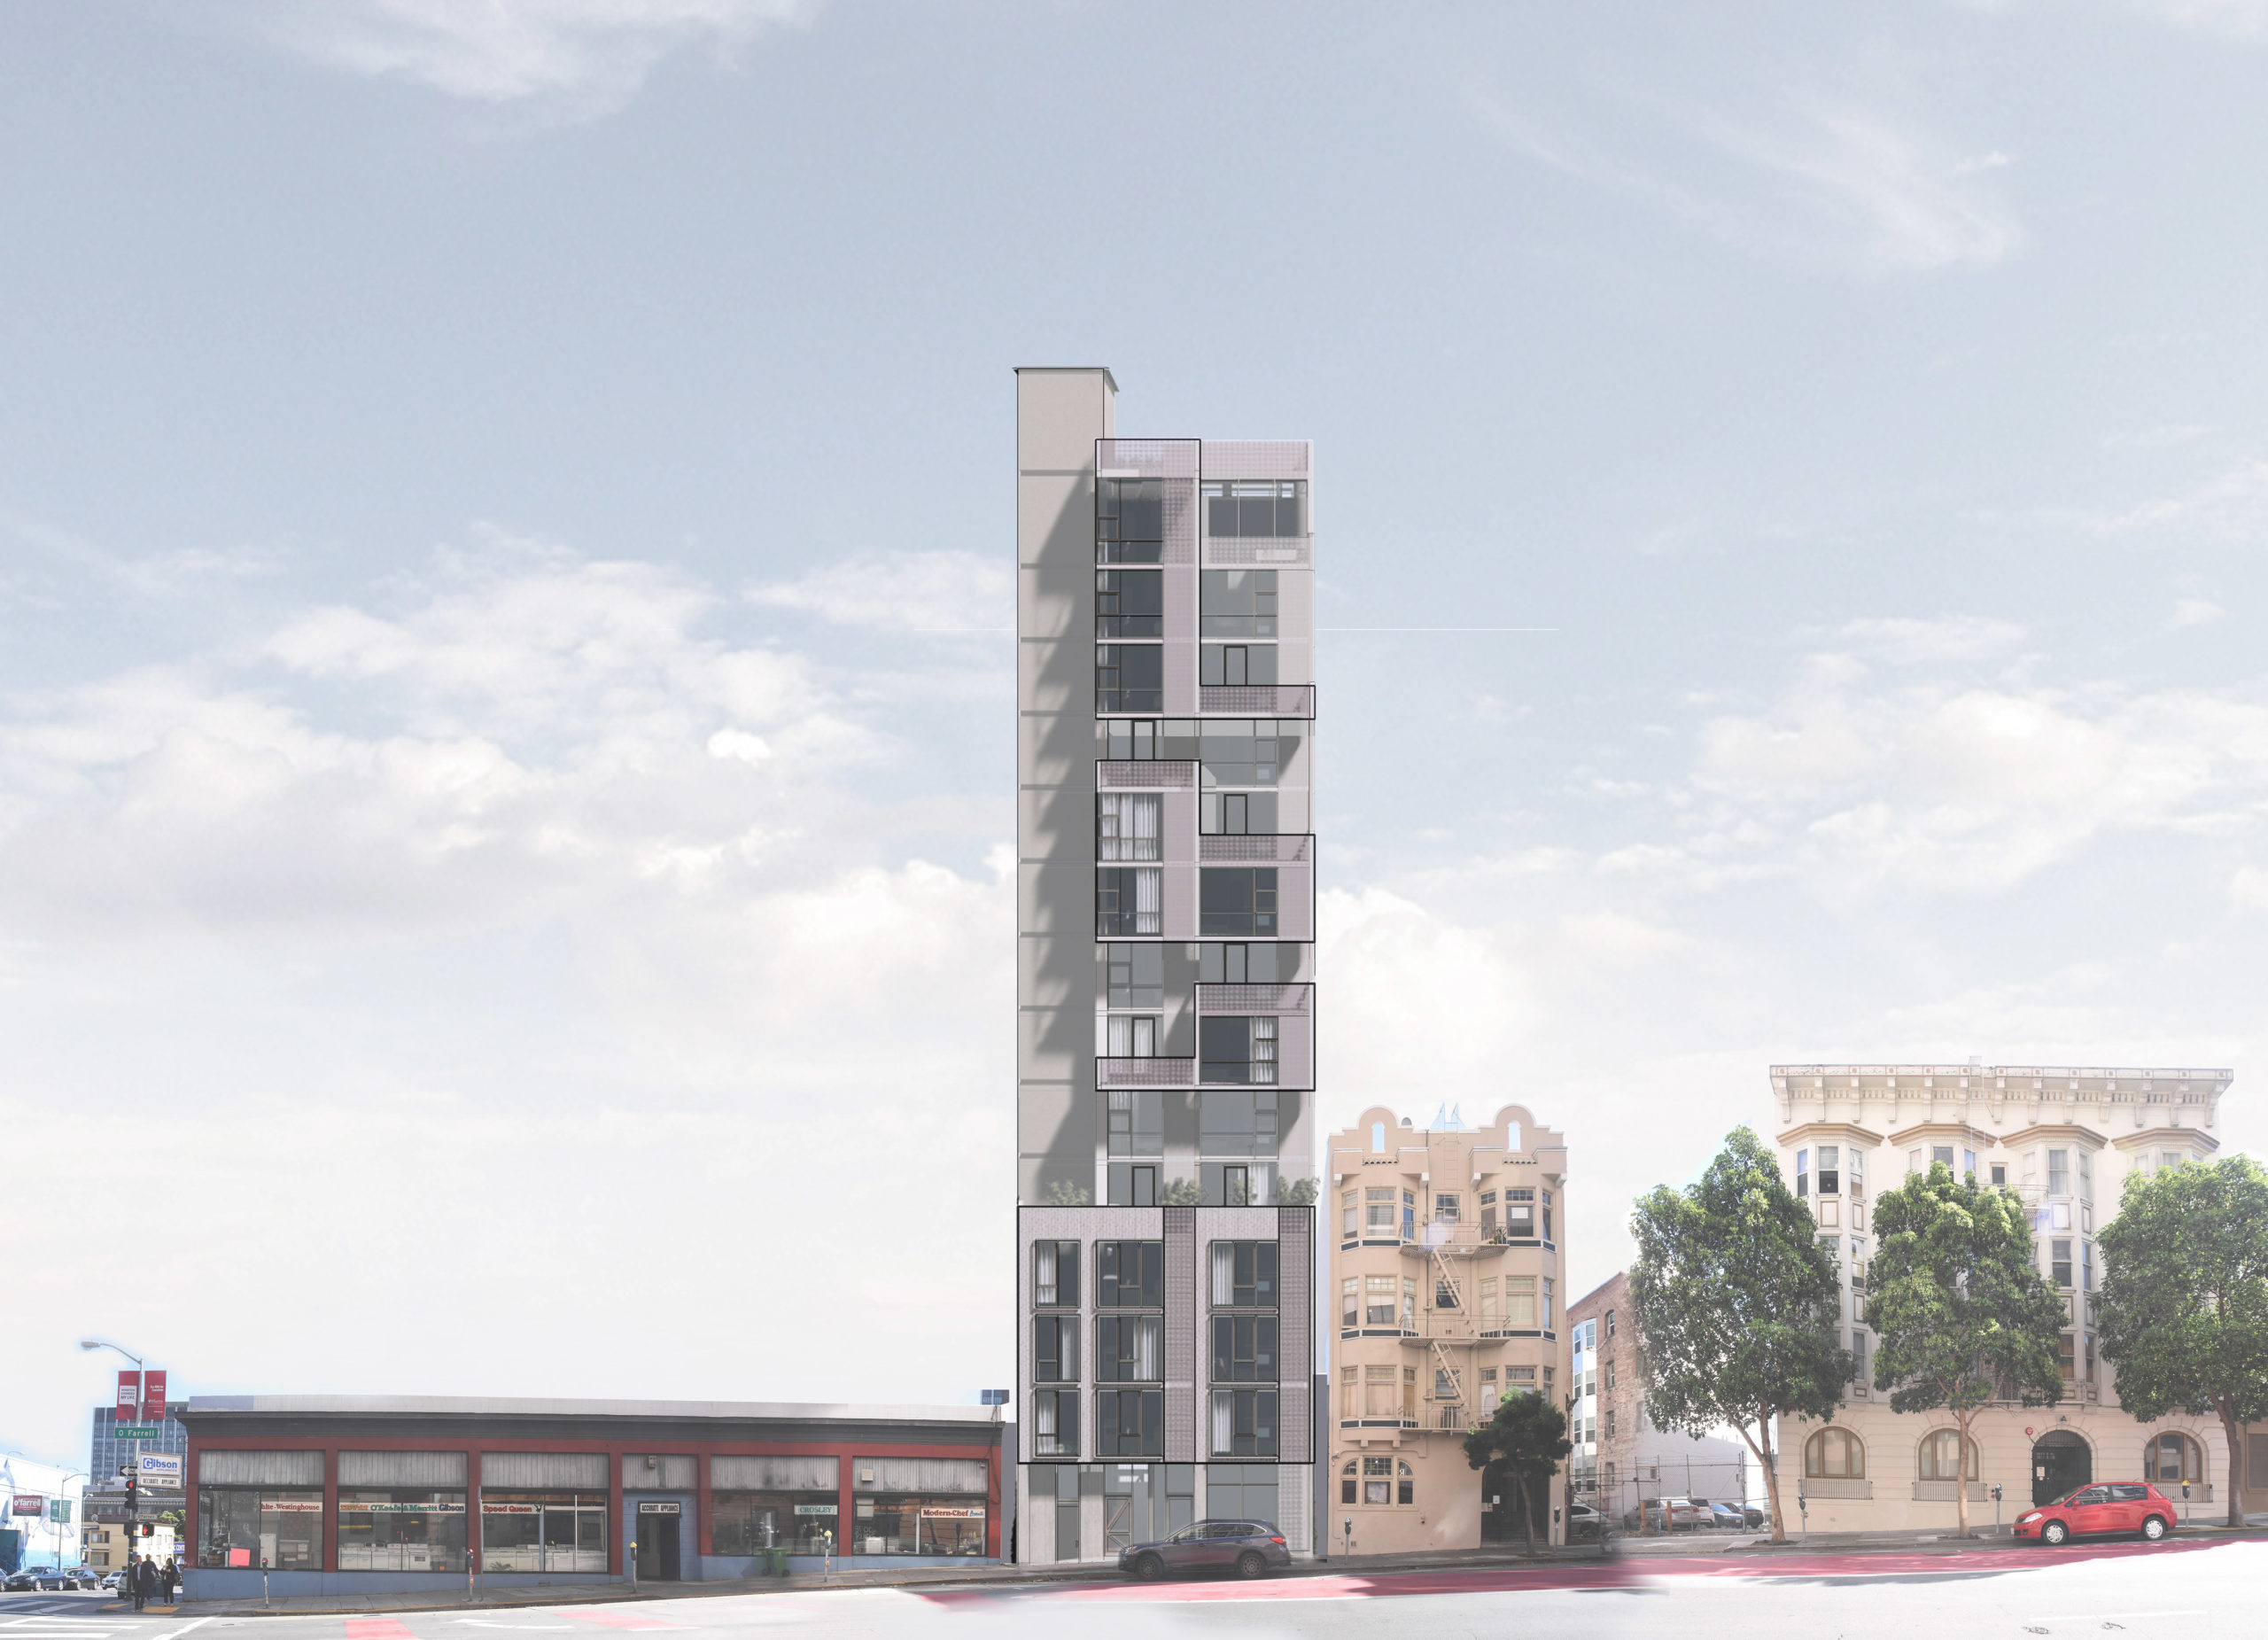 921 O'Farrell Street vertical elevation, rendering courtesy David Baker Architects